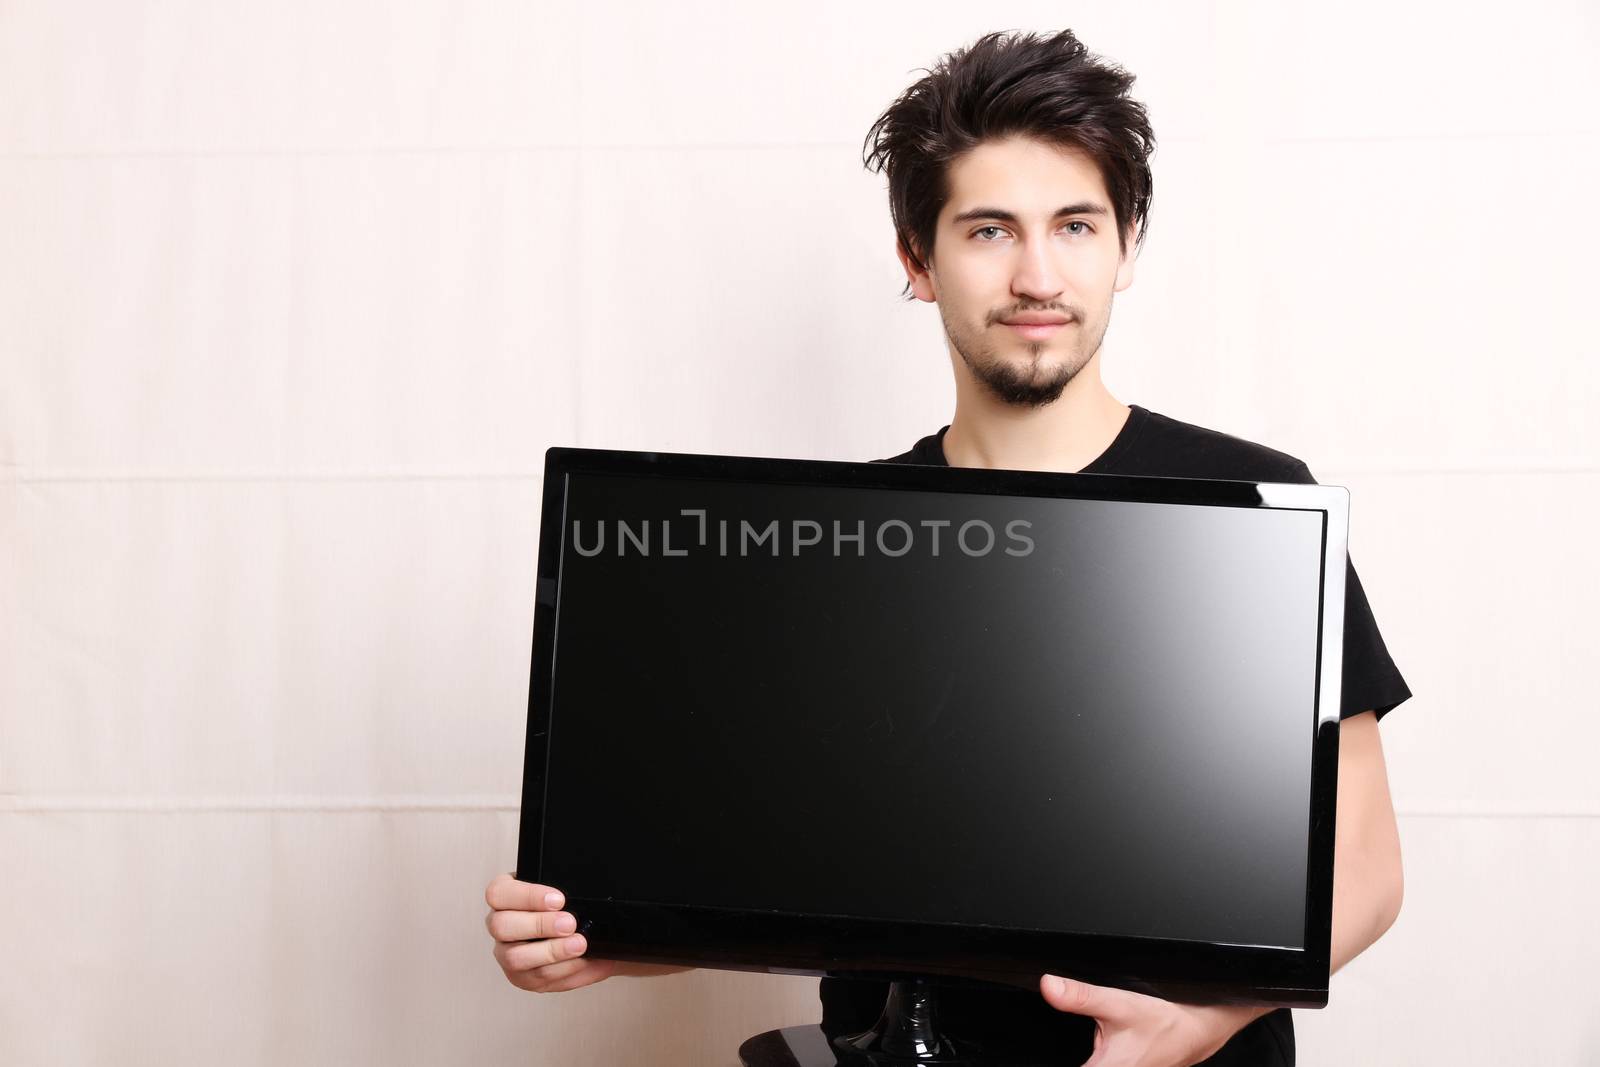 A young hispanic man holding a flatscreen TV.